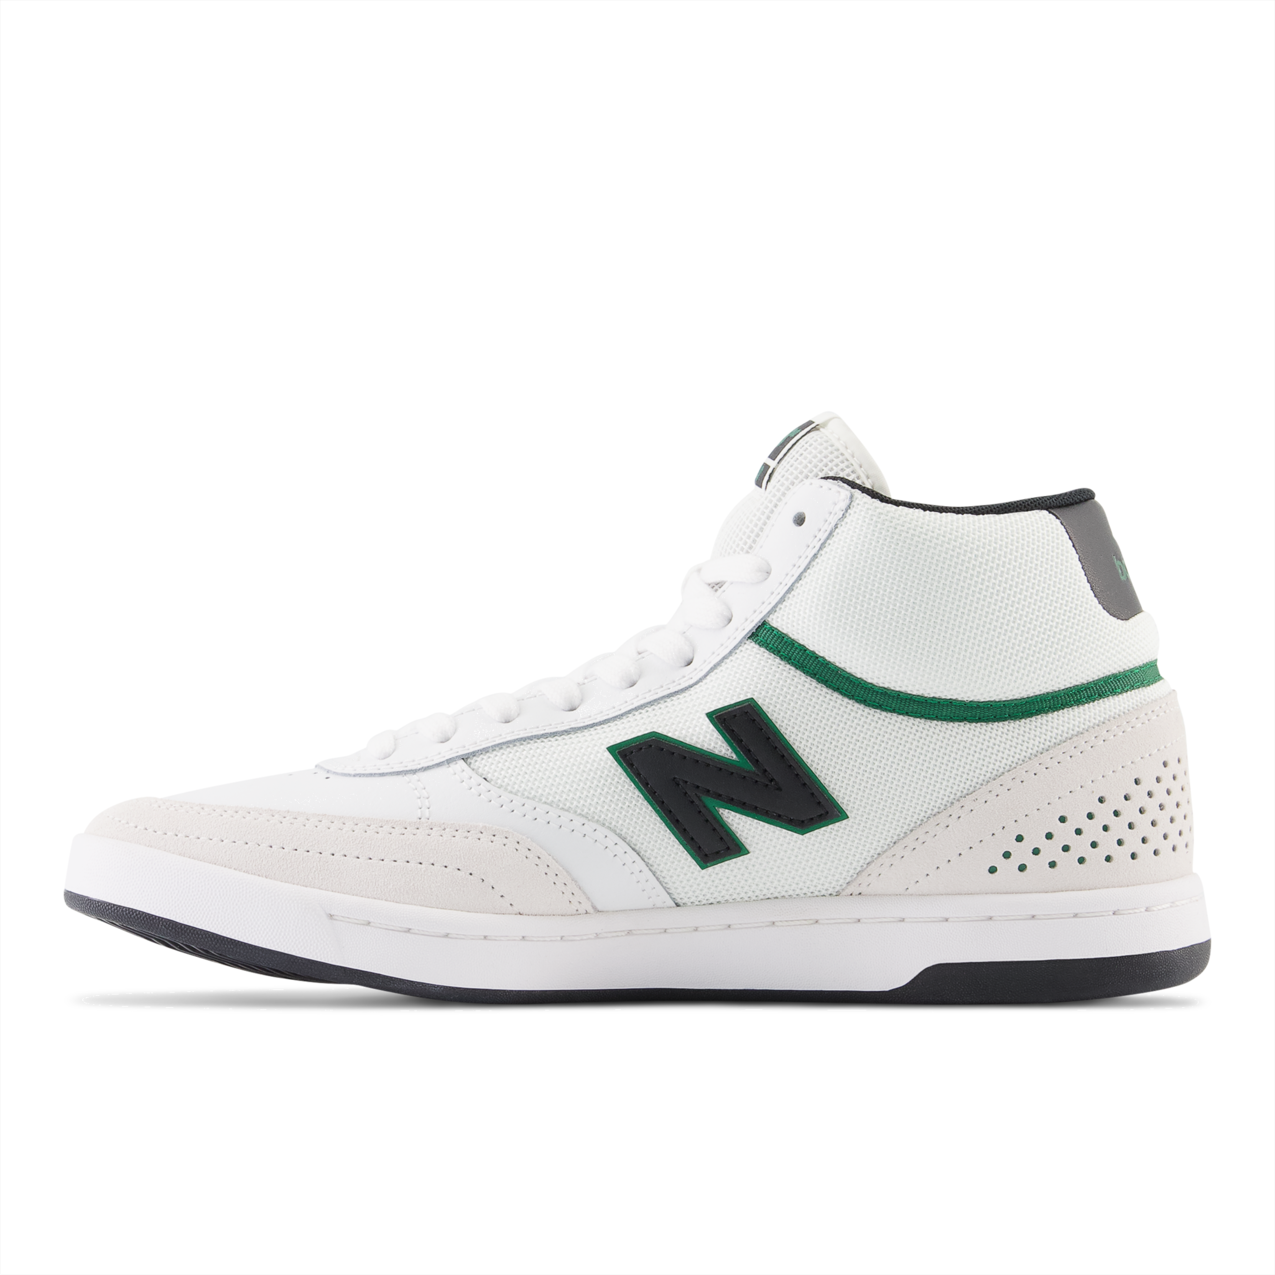 New Balance Numeric Men's 440 High White Black Green Shoes